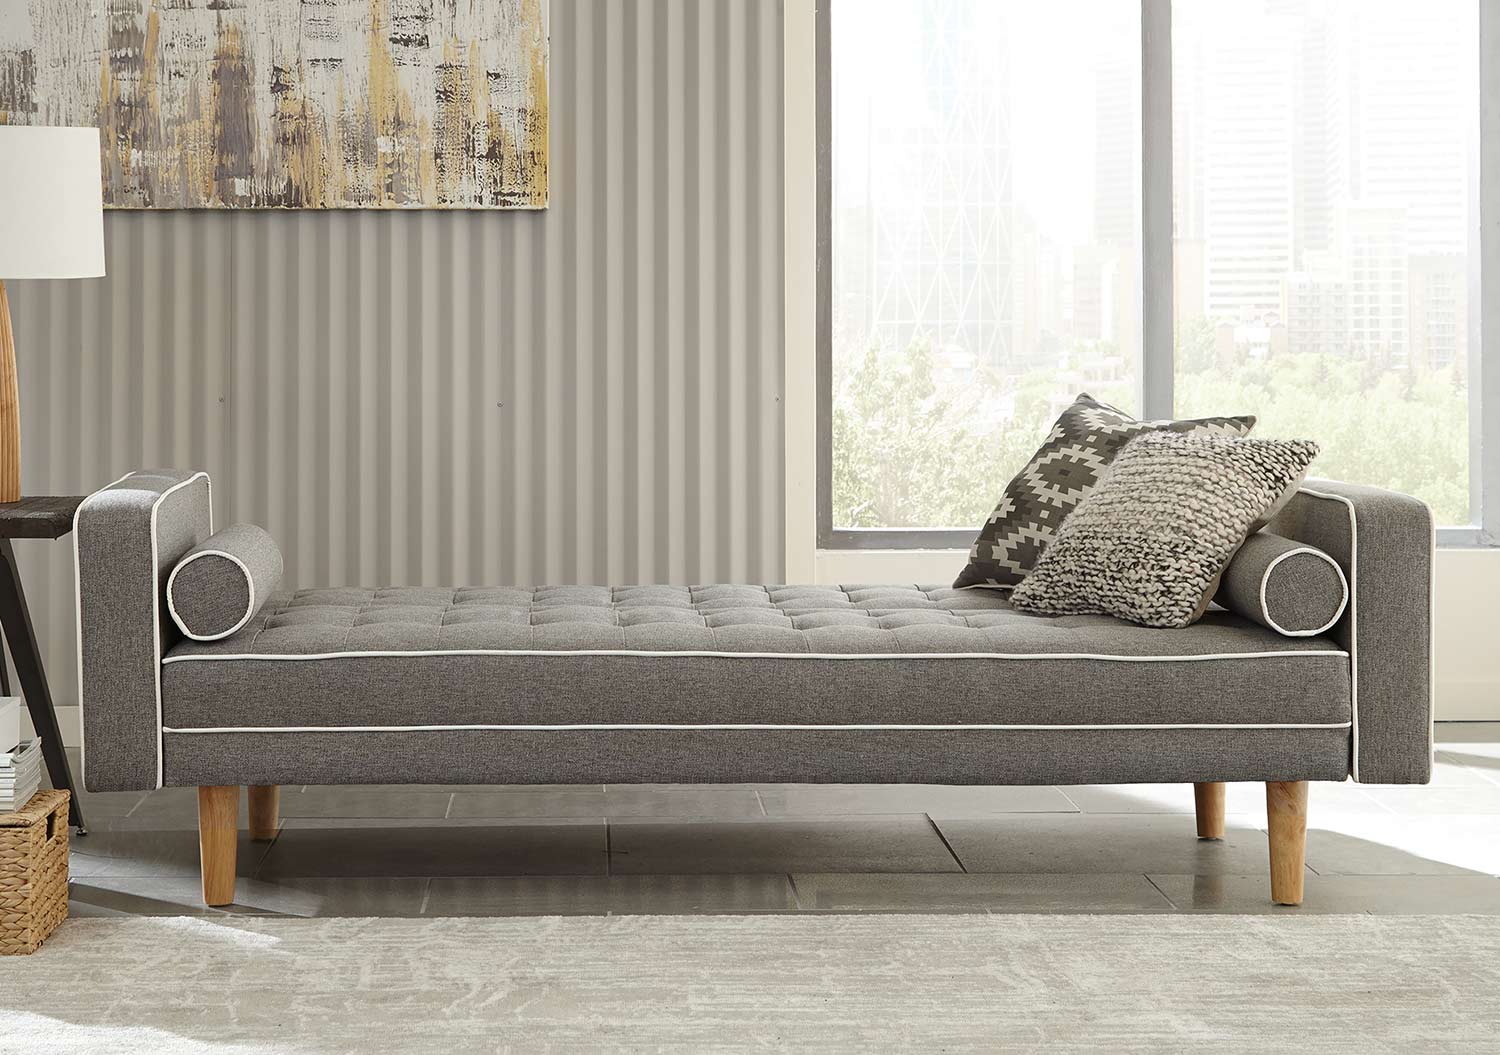 Coaster Luske Sofa Bed - Grey/White